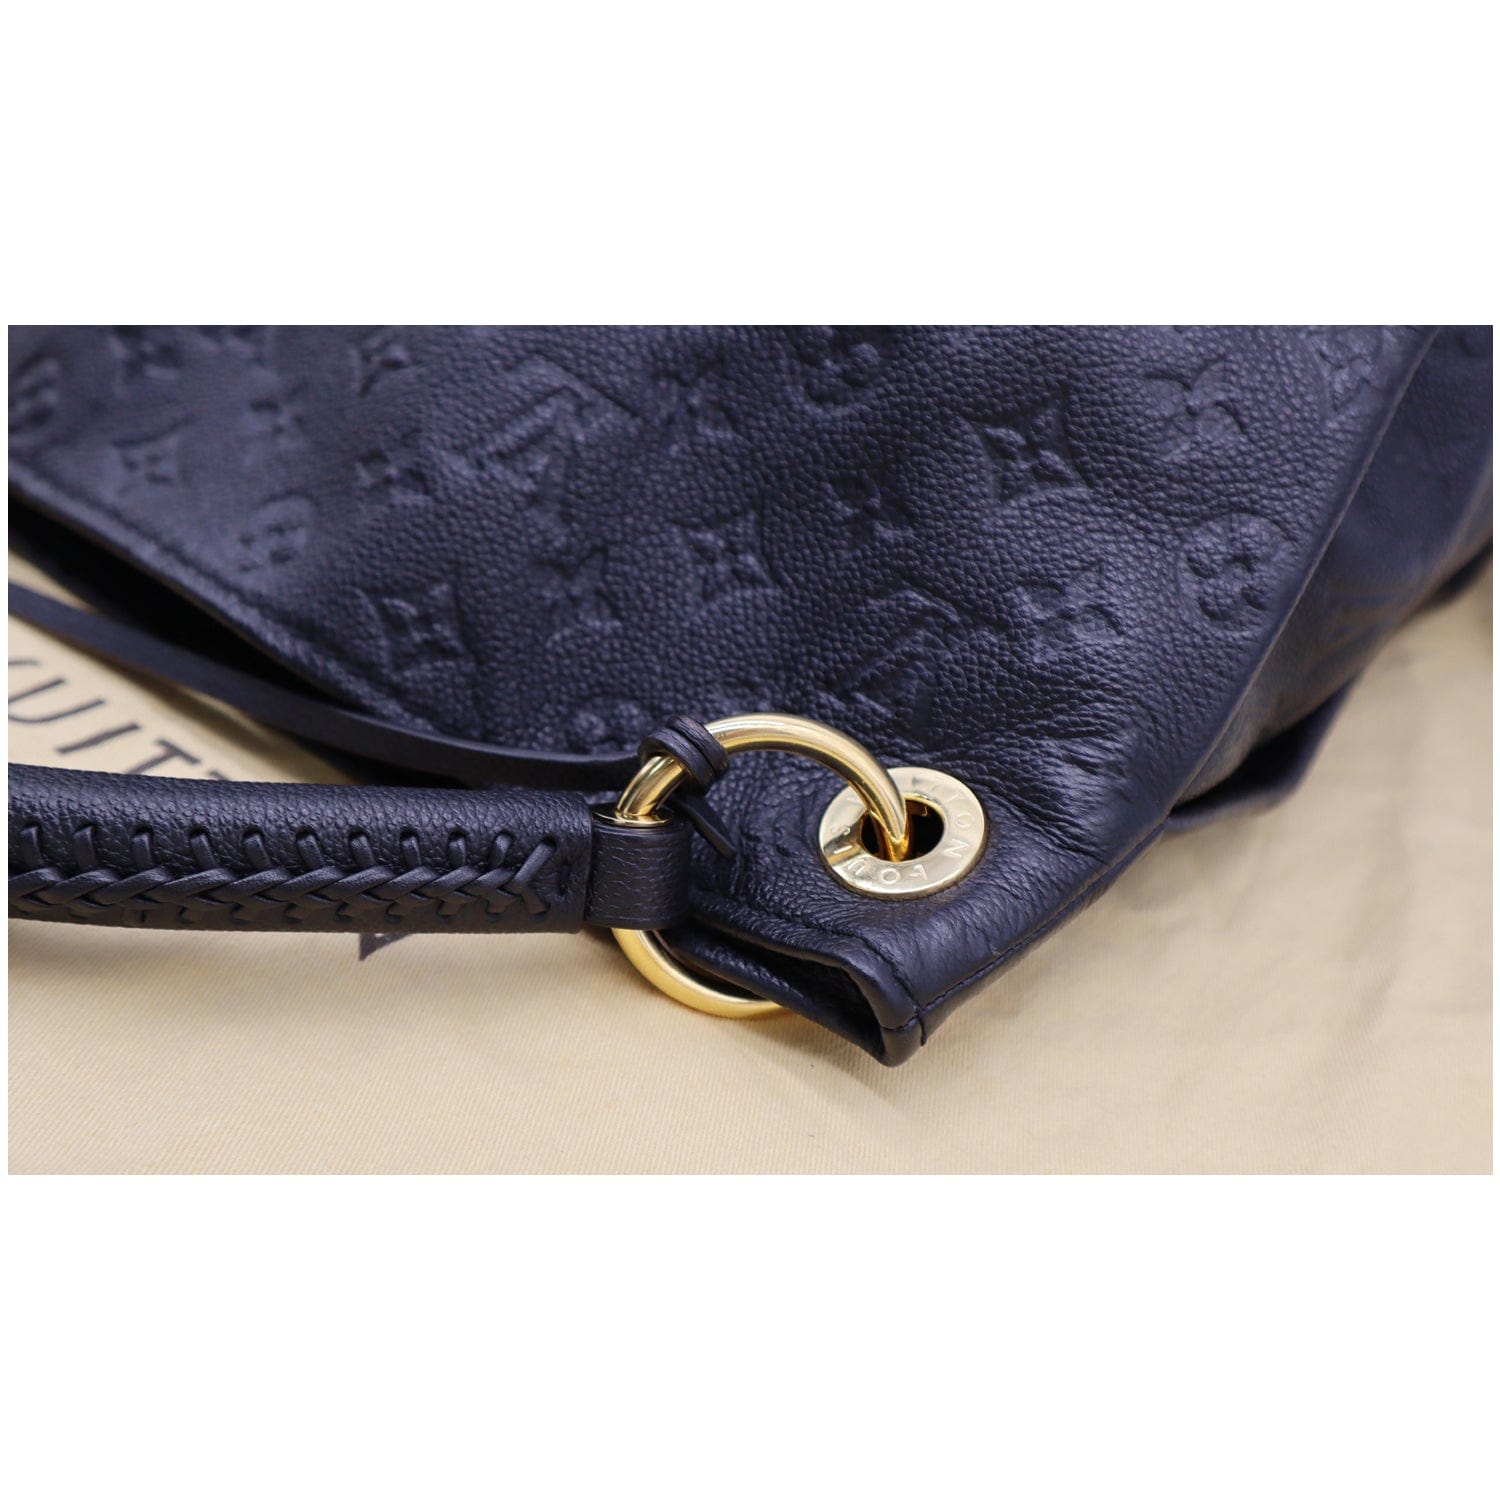 Artsy MM bag in black leather Louis Vuitton - Second Hand / Used – Vintega